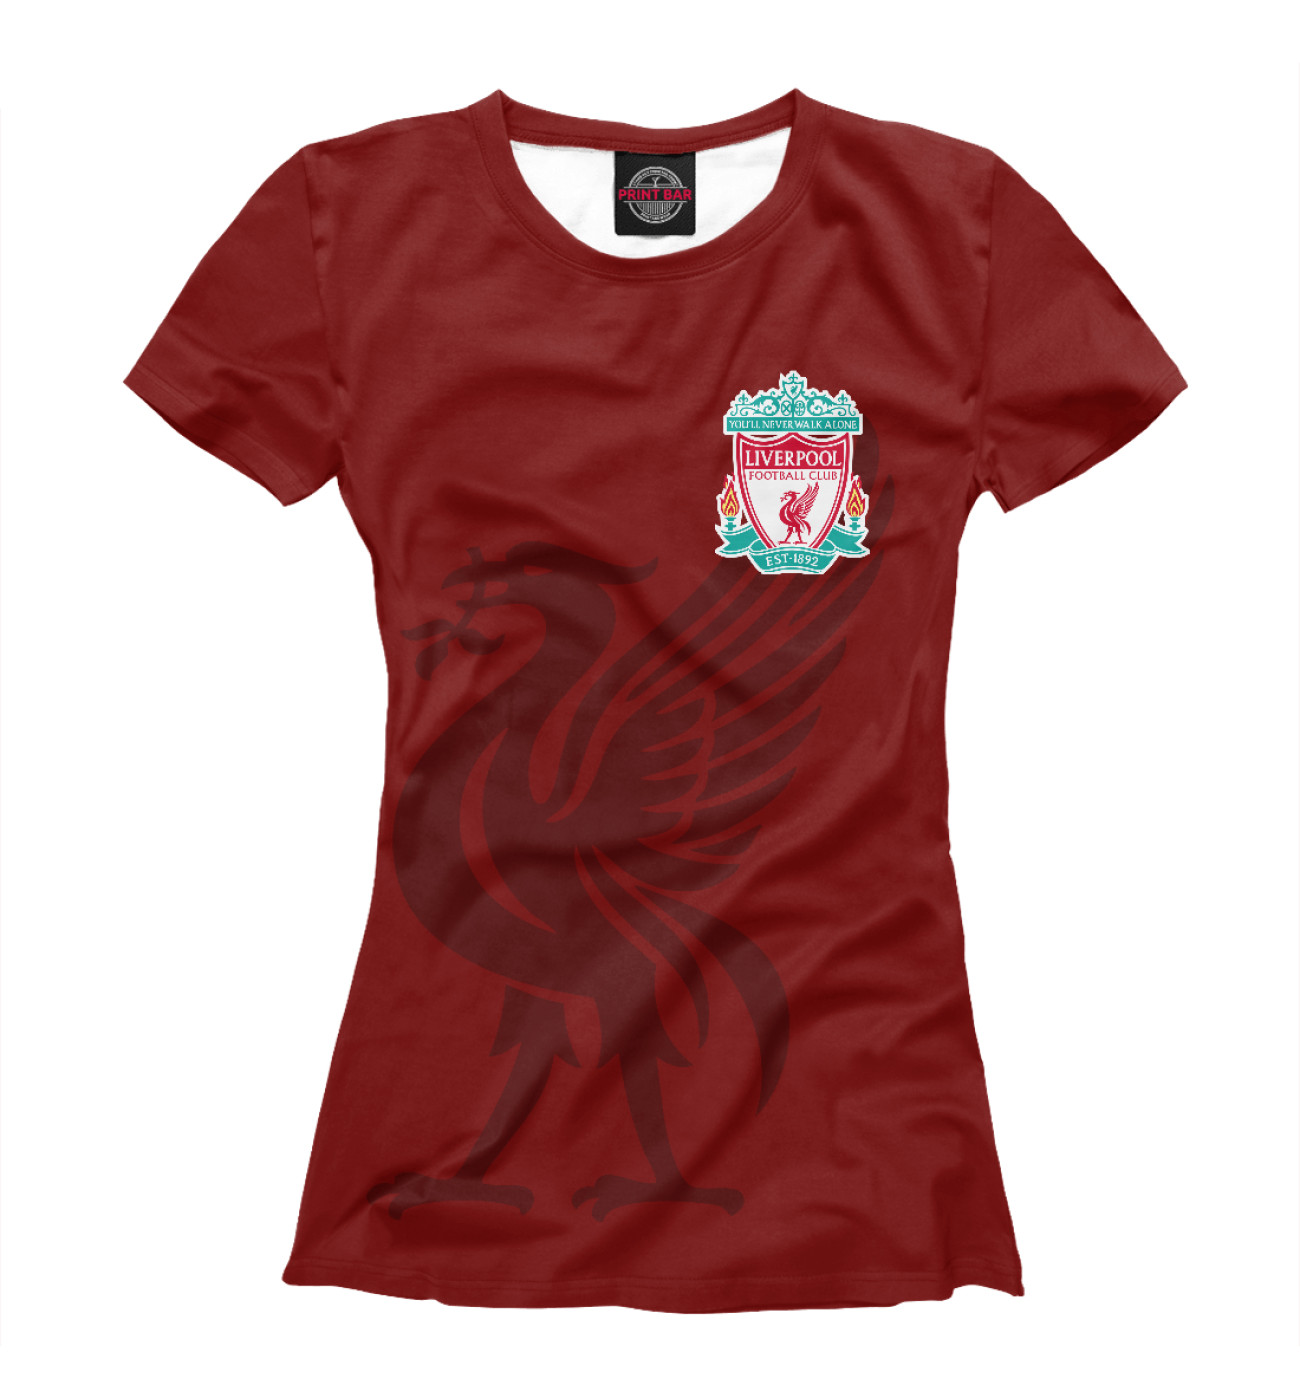 Женская Футболка Liverpool, артикул: LVP-666039-fut-1